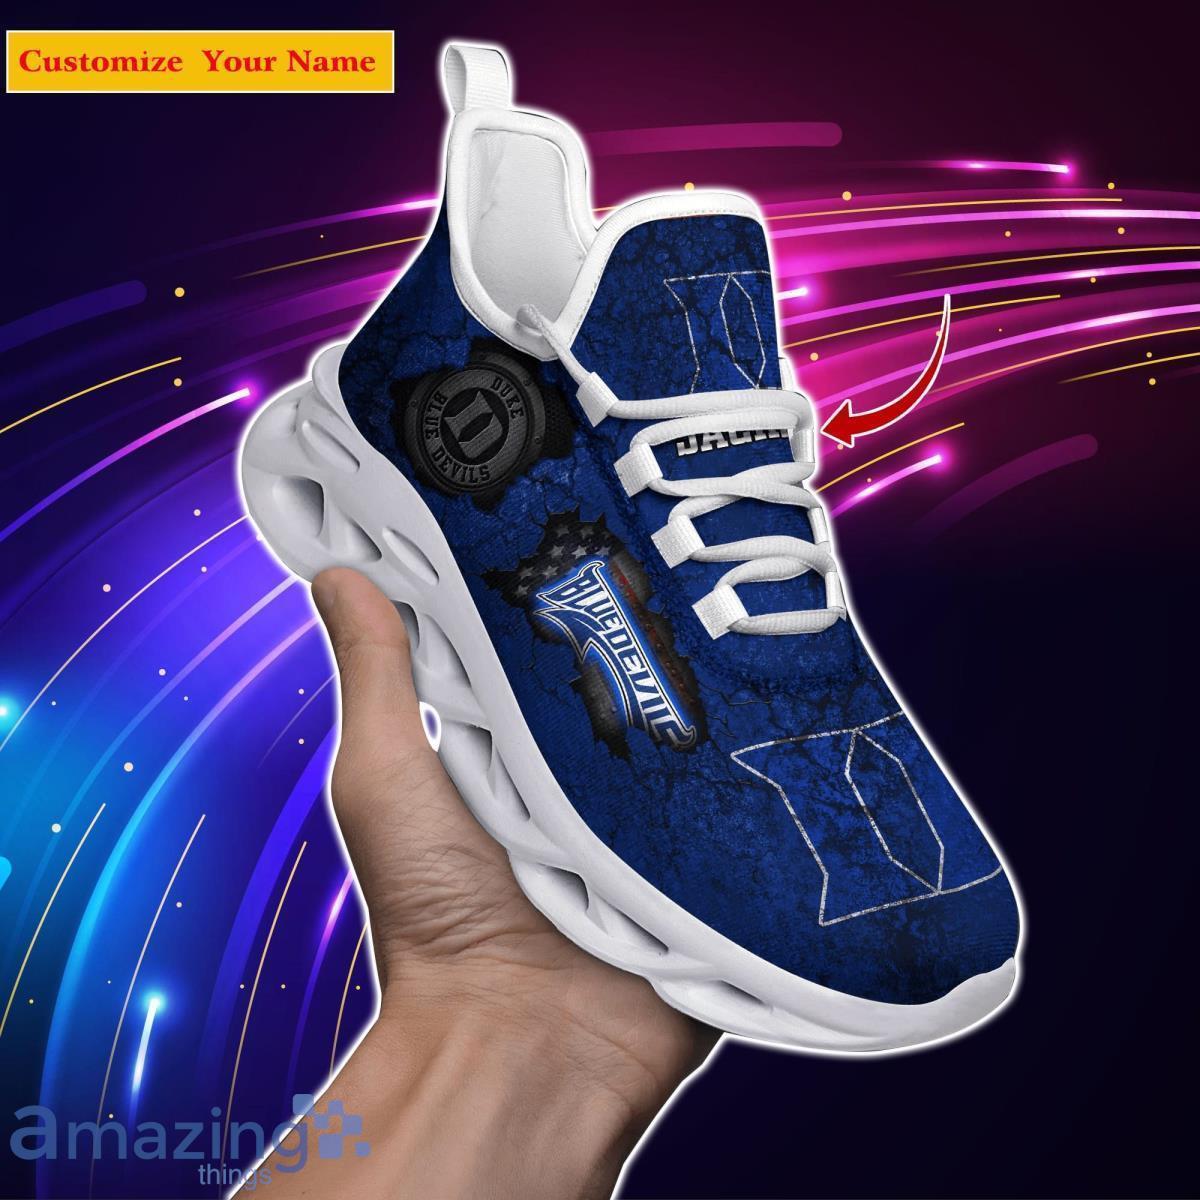 Duke Shoes | A Custom Shoe concept by Andrew Barham